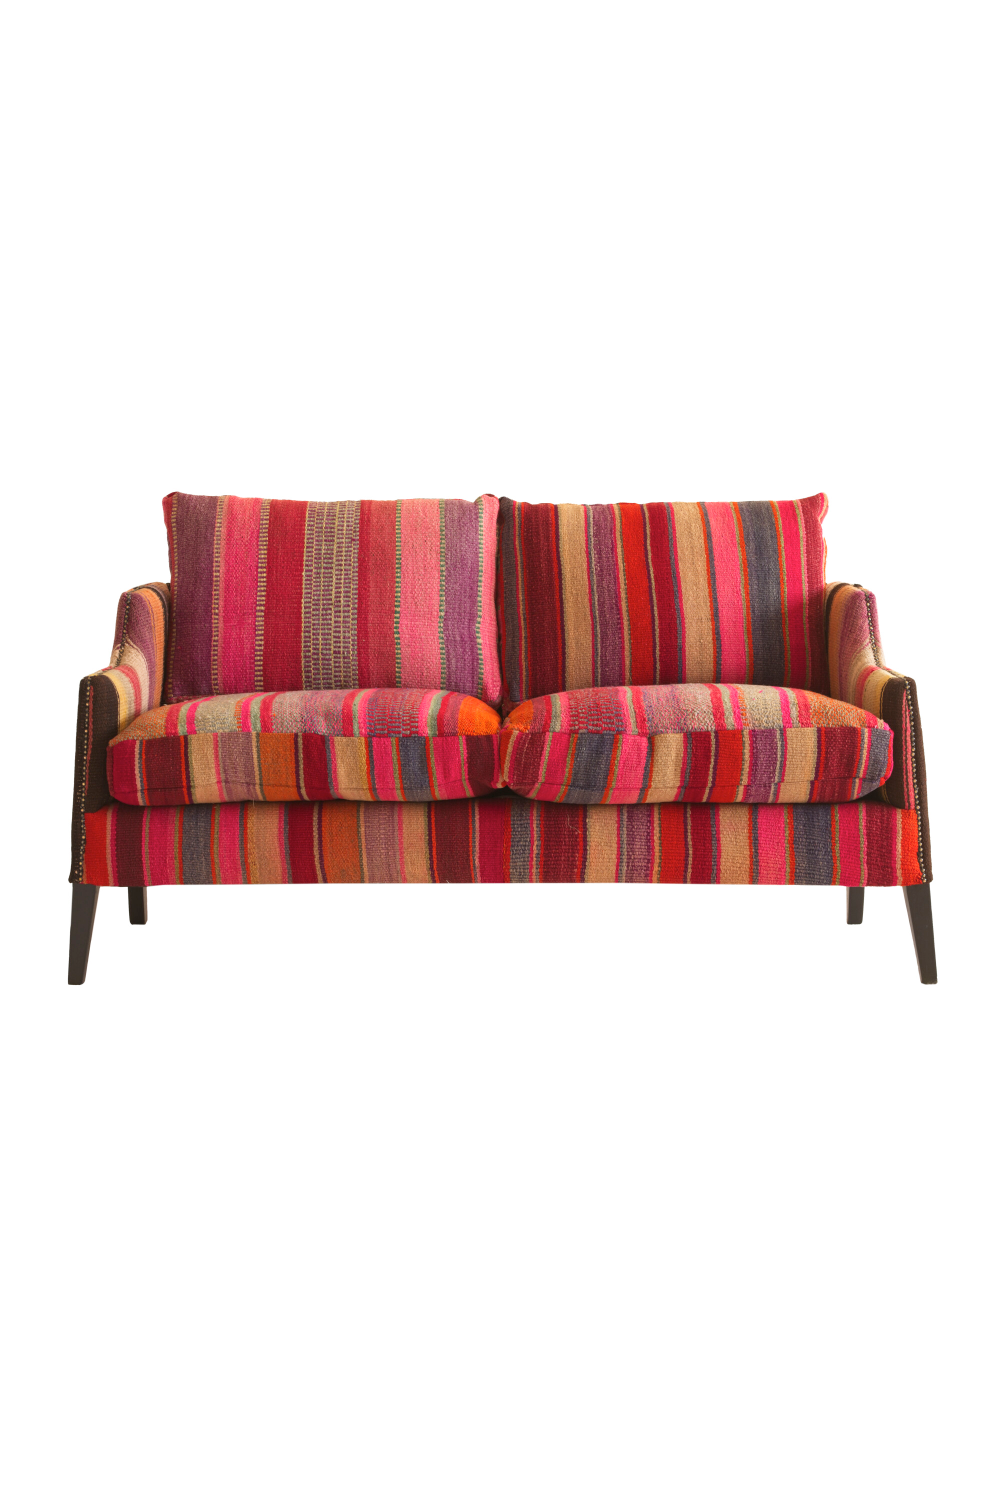 Multi-colored Wool Upholstered Sofa | Andrew Martin Regal | Oroa.com